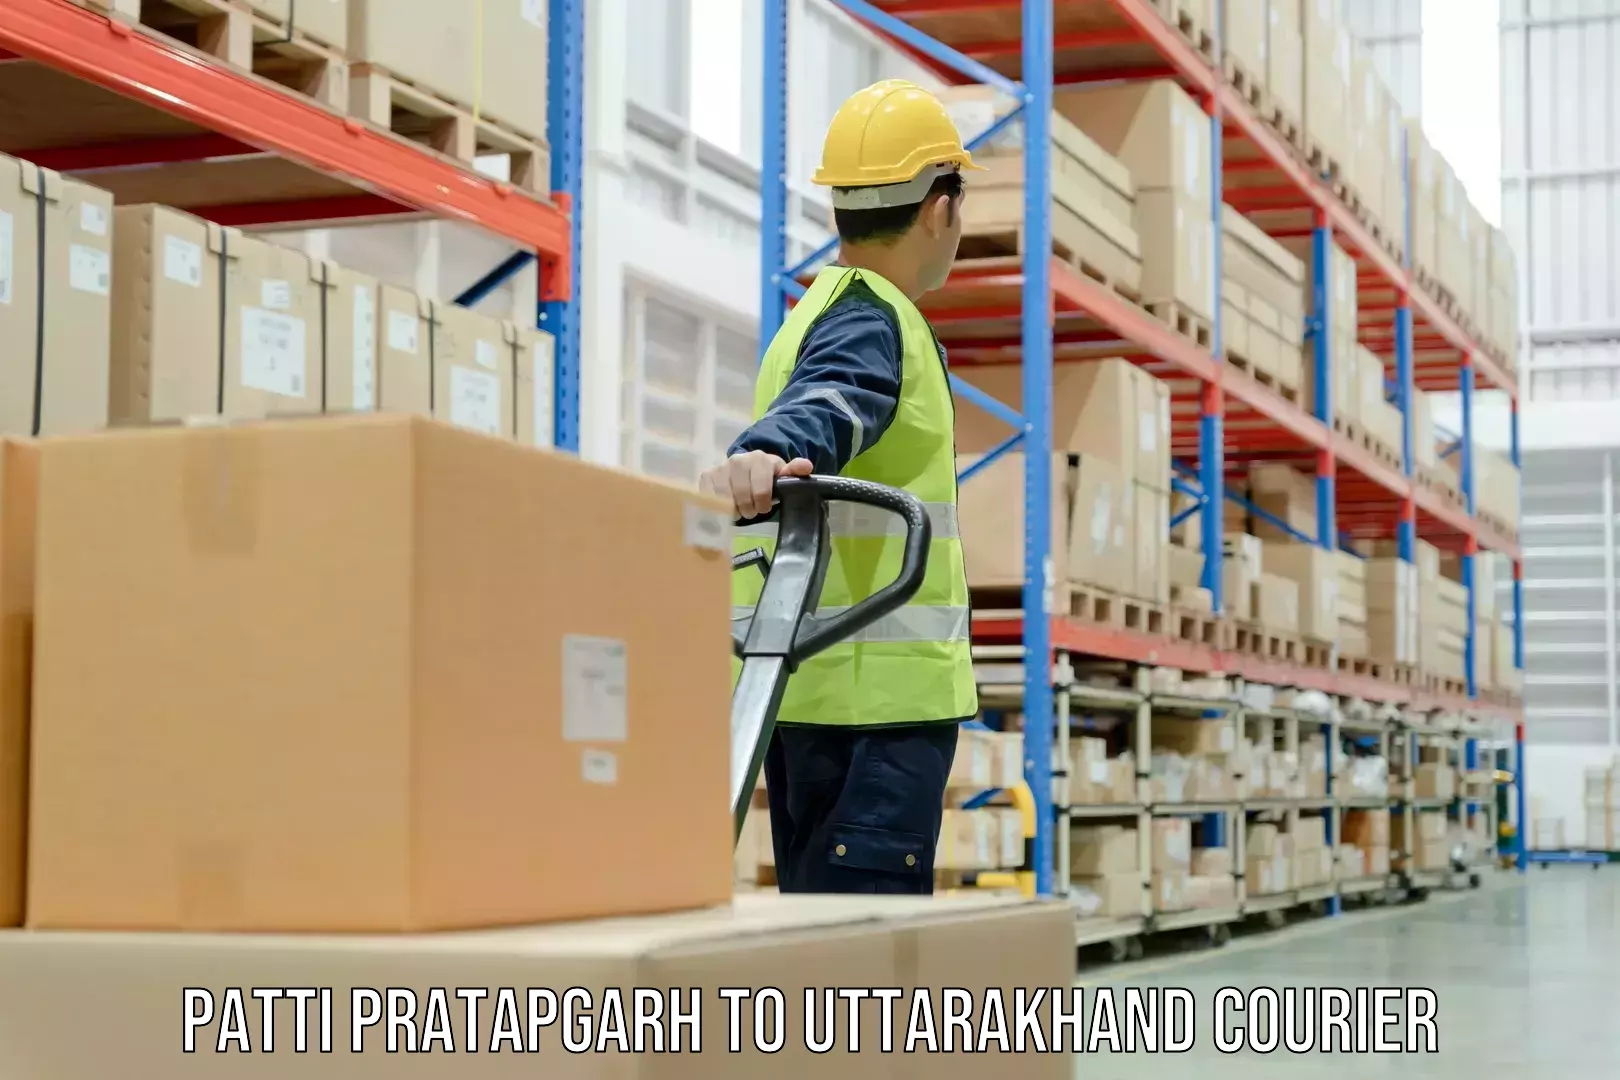 Multi-city courier Patti Pratapgarh to Uttarakhand